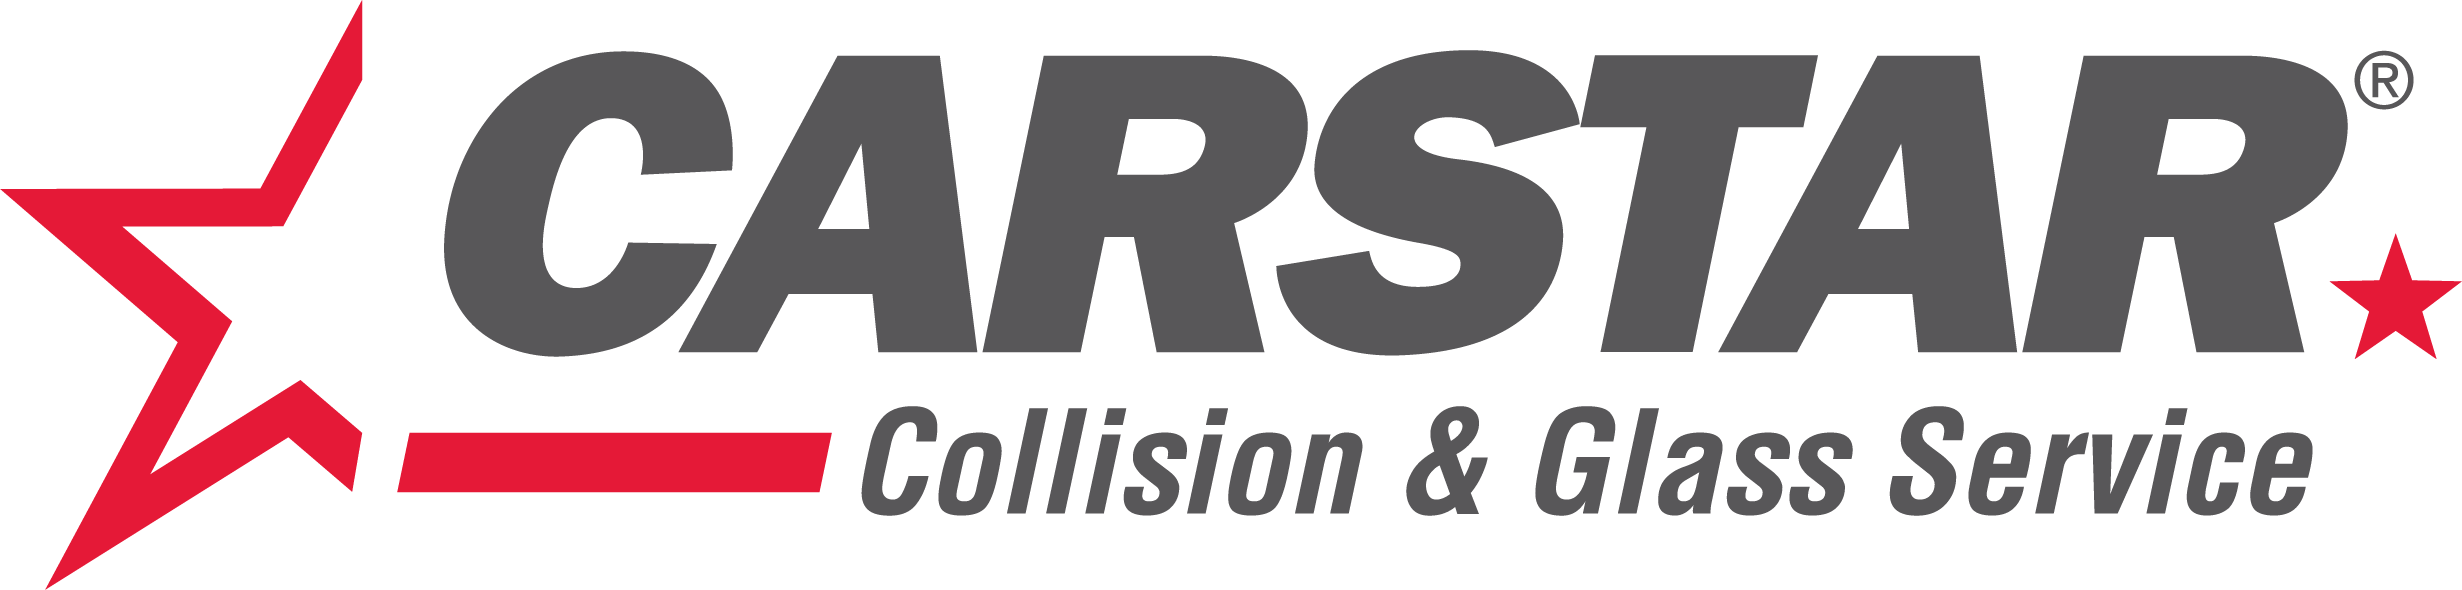 CARSTAR Collision & Glass Service